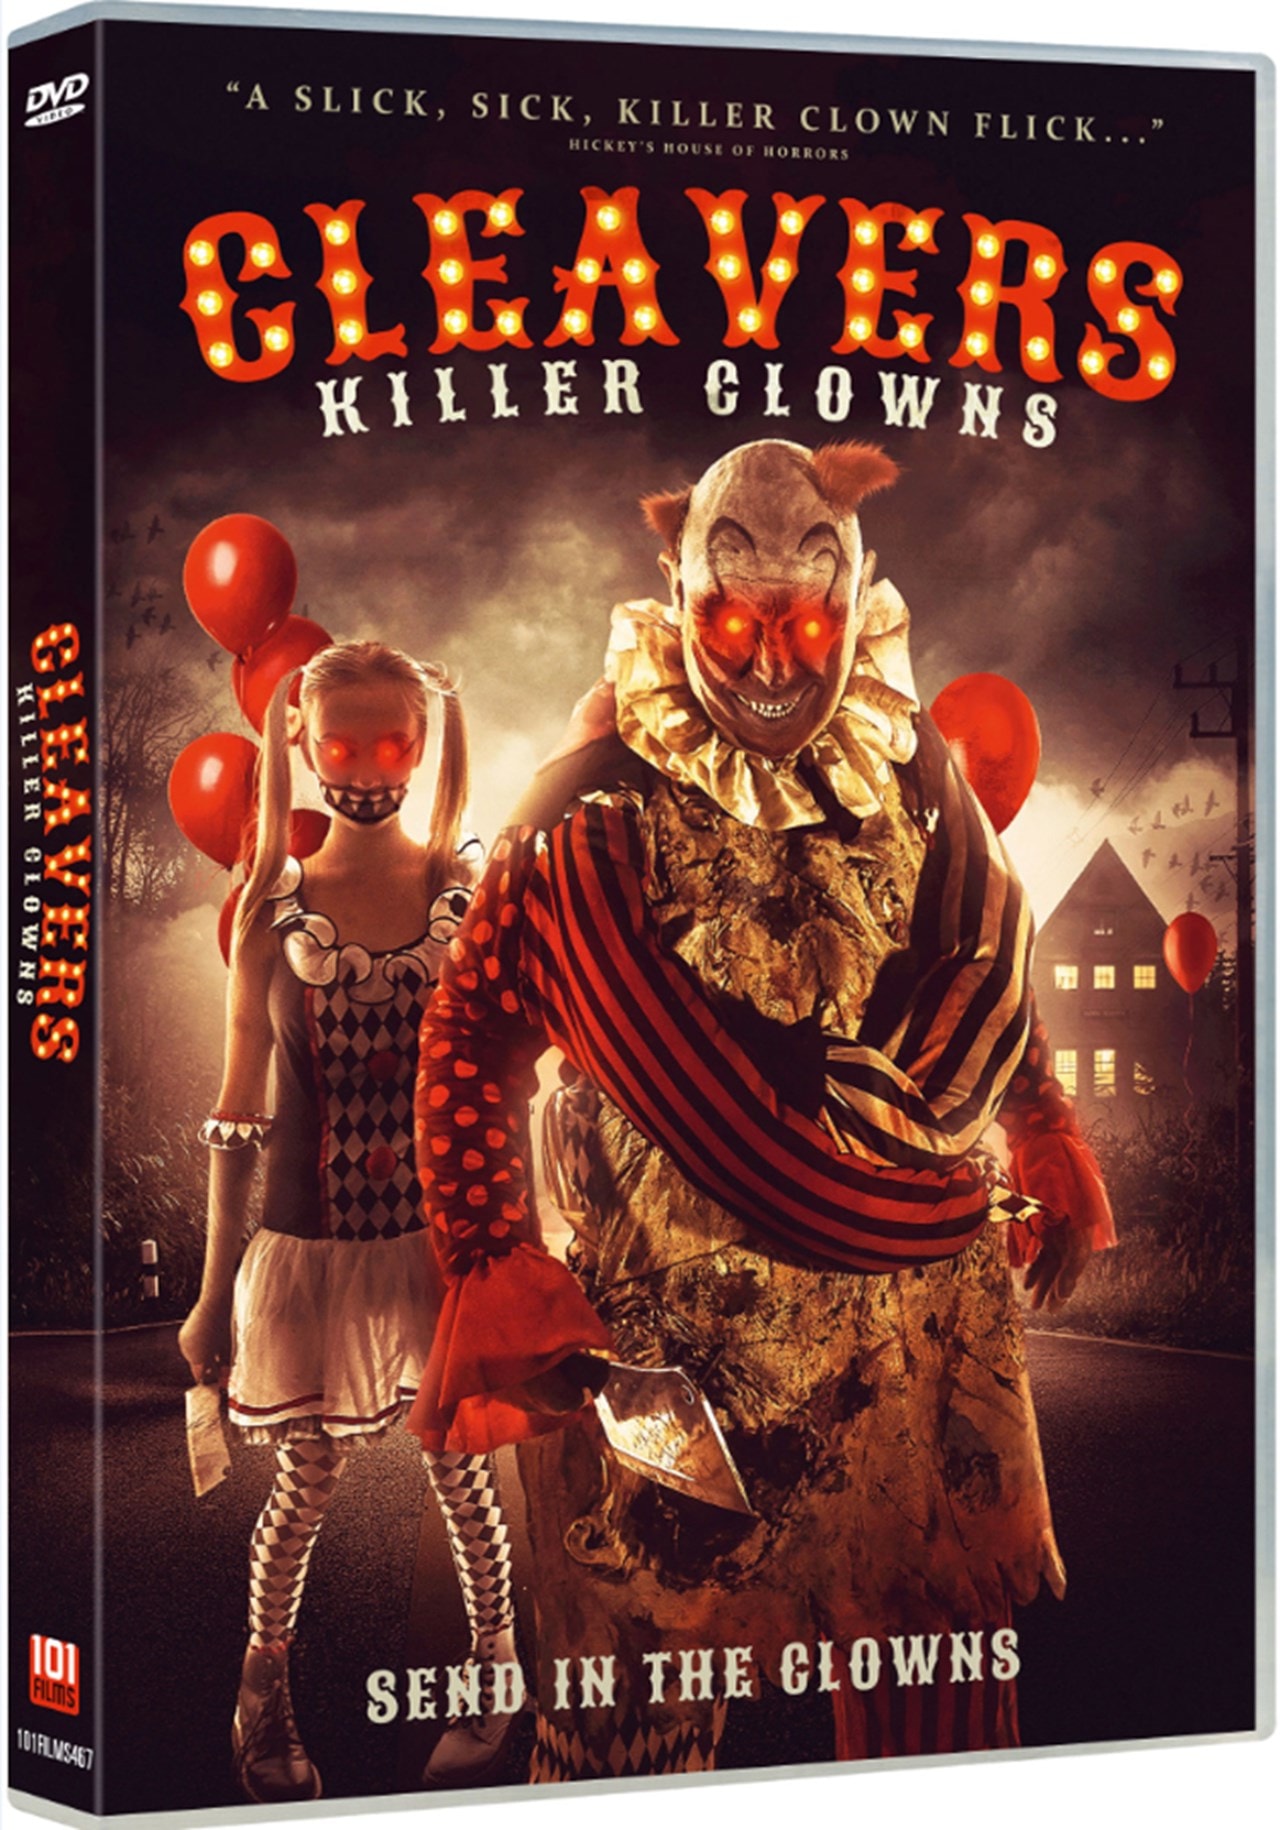 Cleavers Killer Clowns Dvd Free Shipping Over £20 Hmv Store